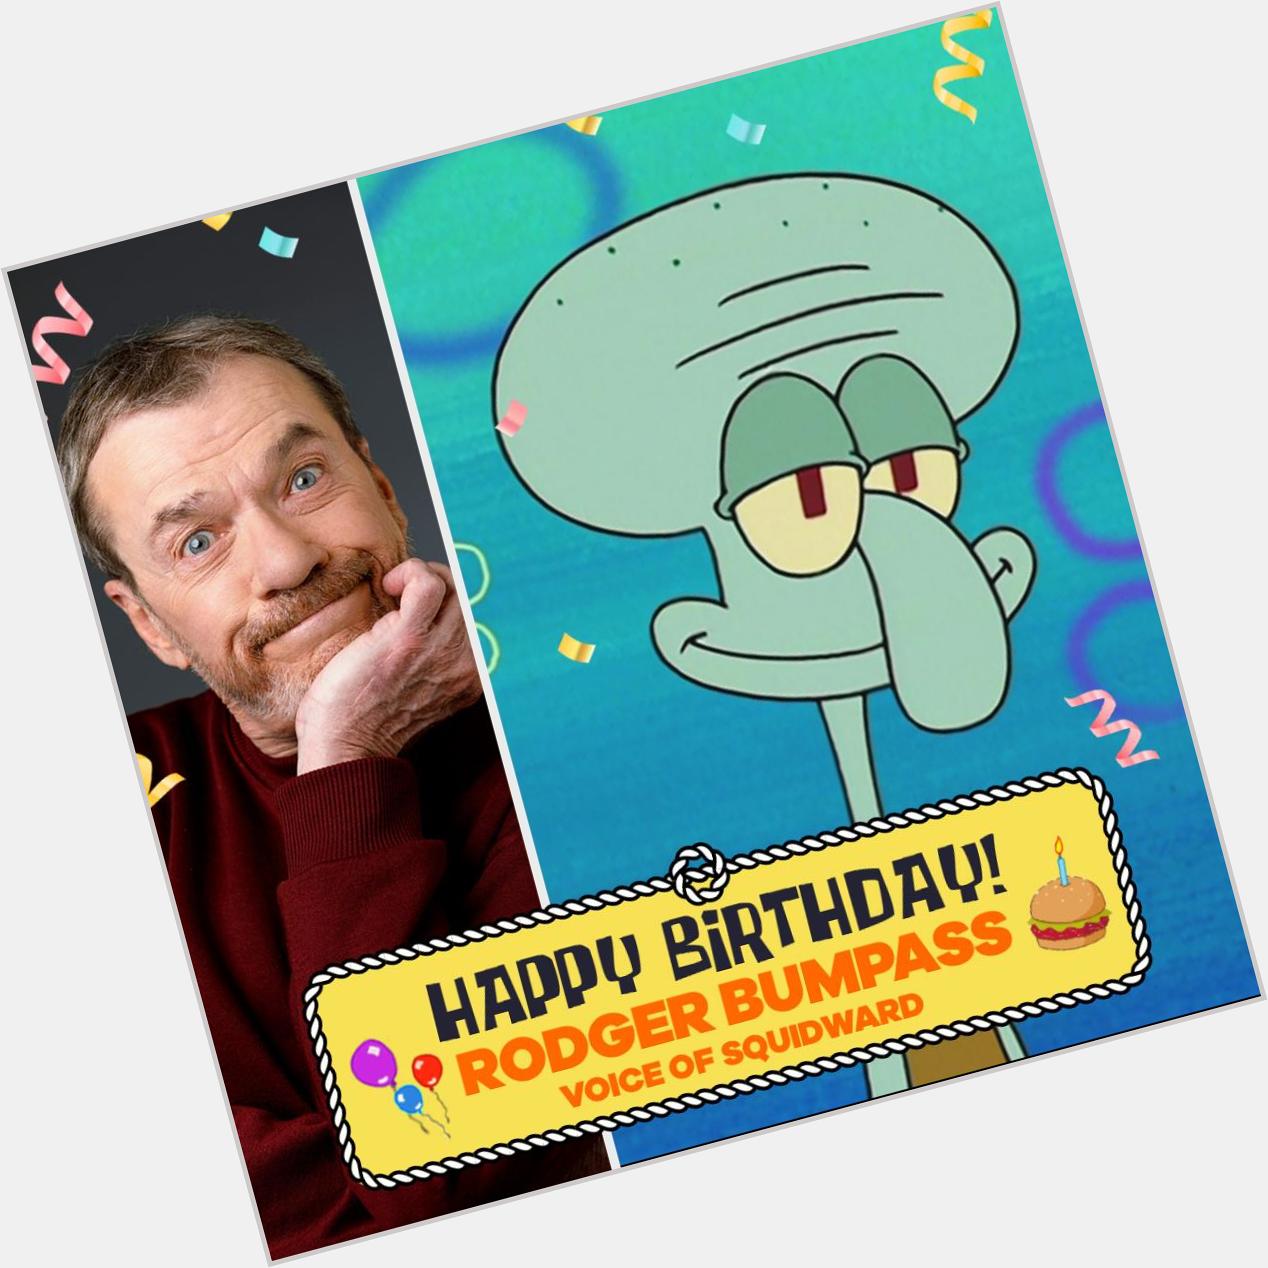 Happy birthday to the voice of Squidward from SpongeBob SquarePants, Rodger Bumpass!  